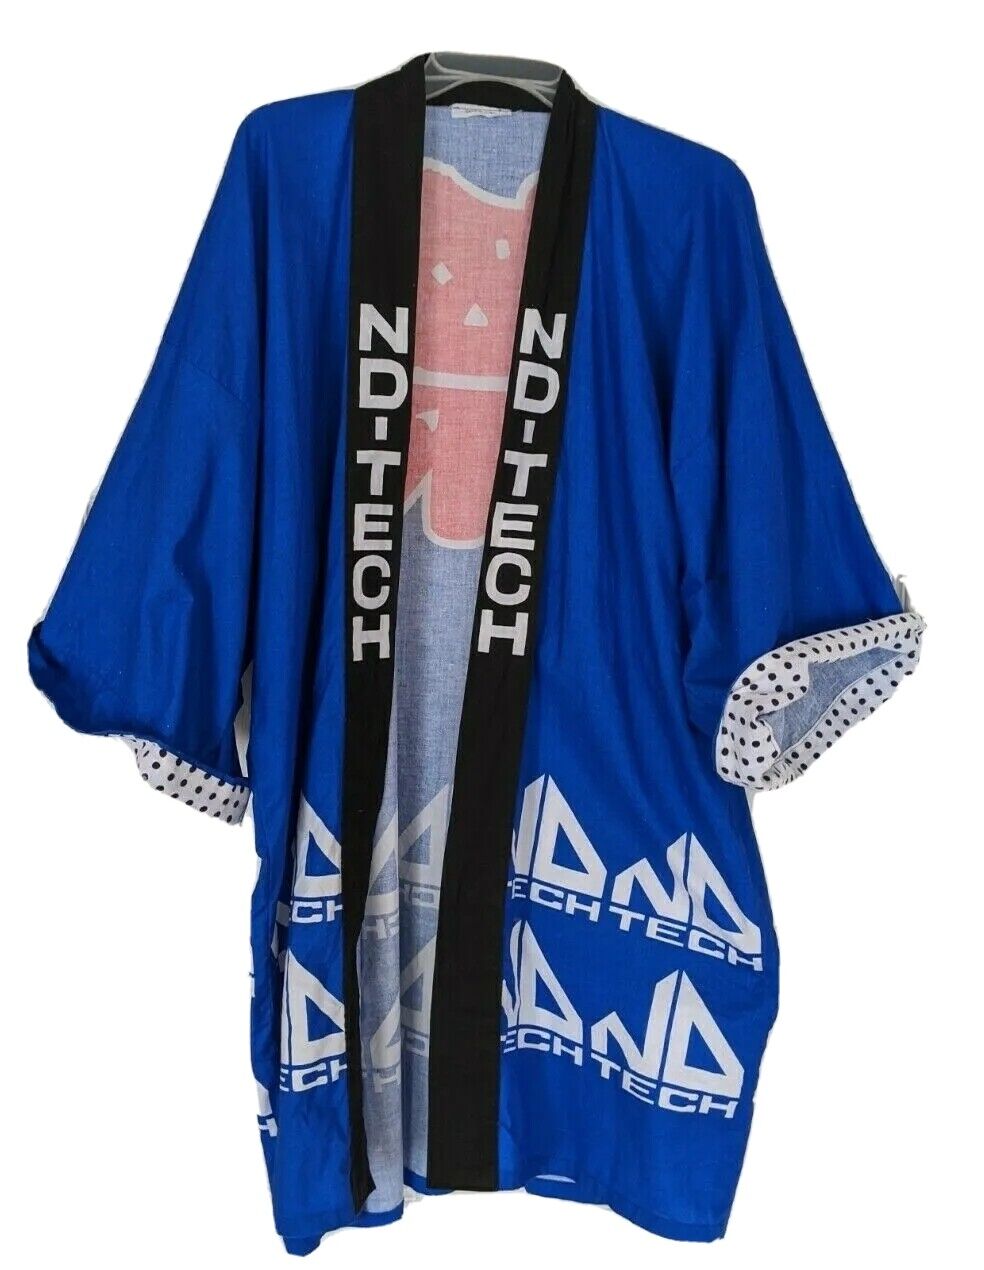 Kimono jacket ND Tech business promotion, multi-color, 34\